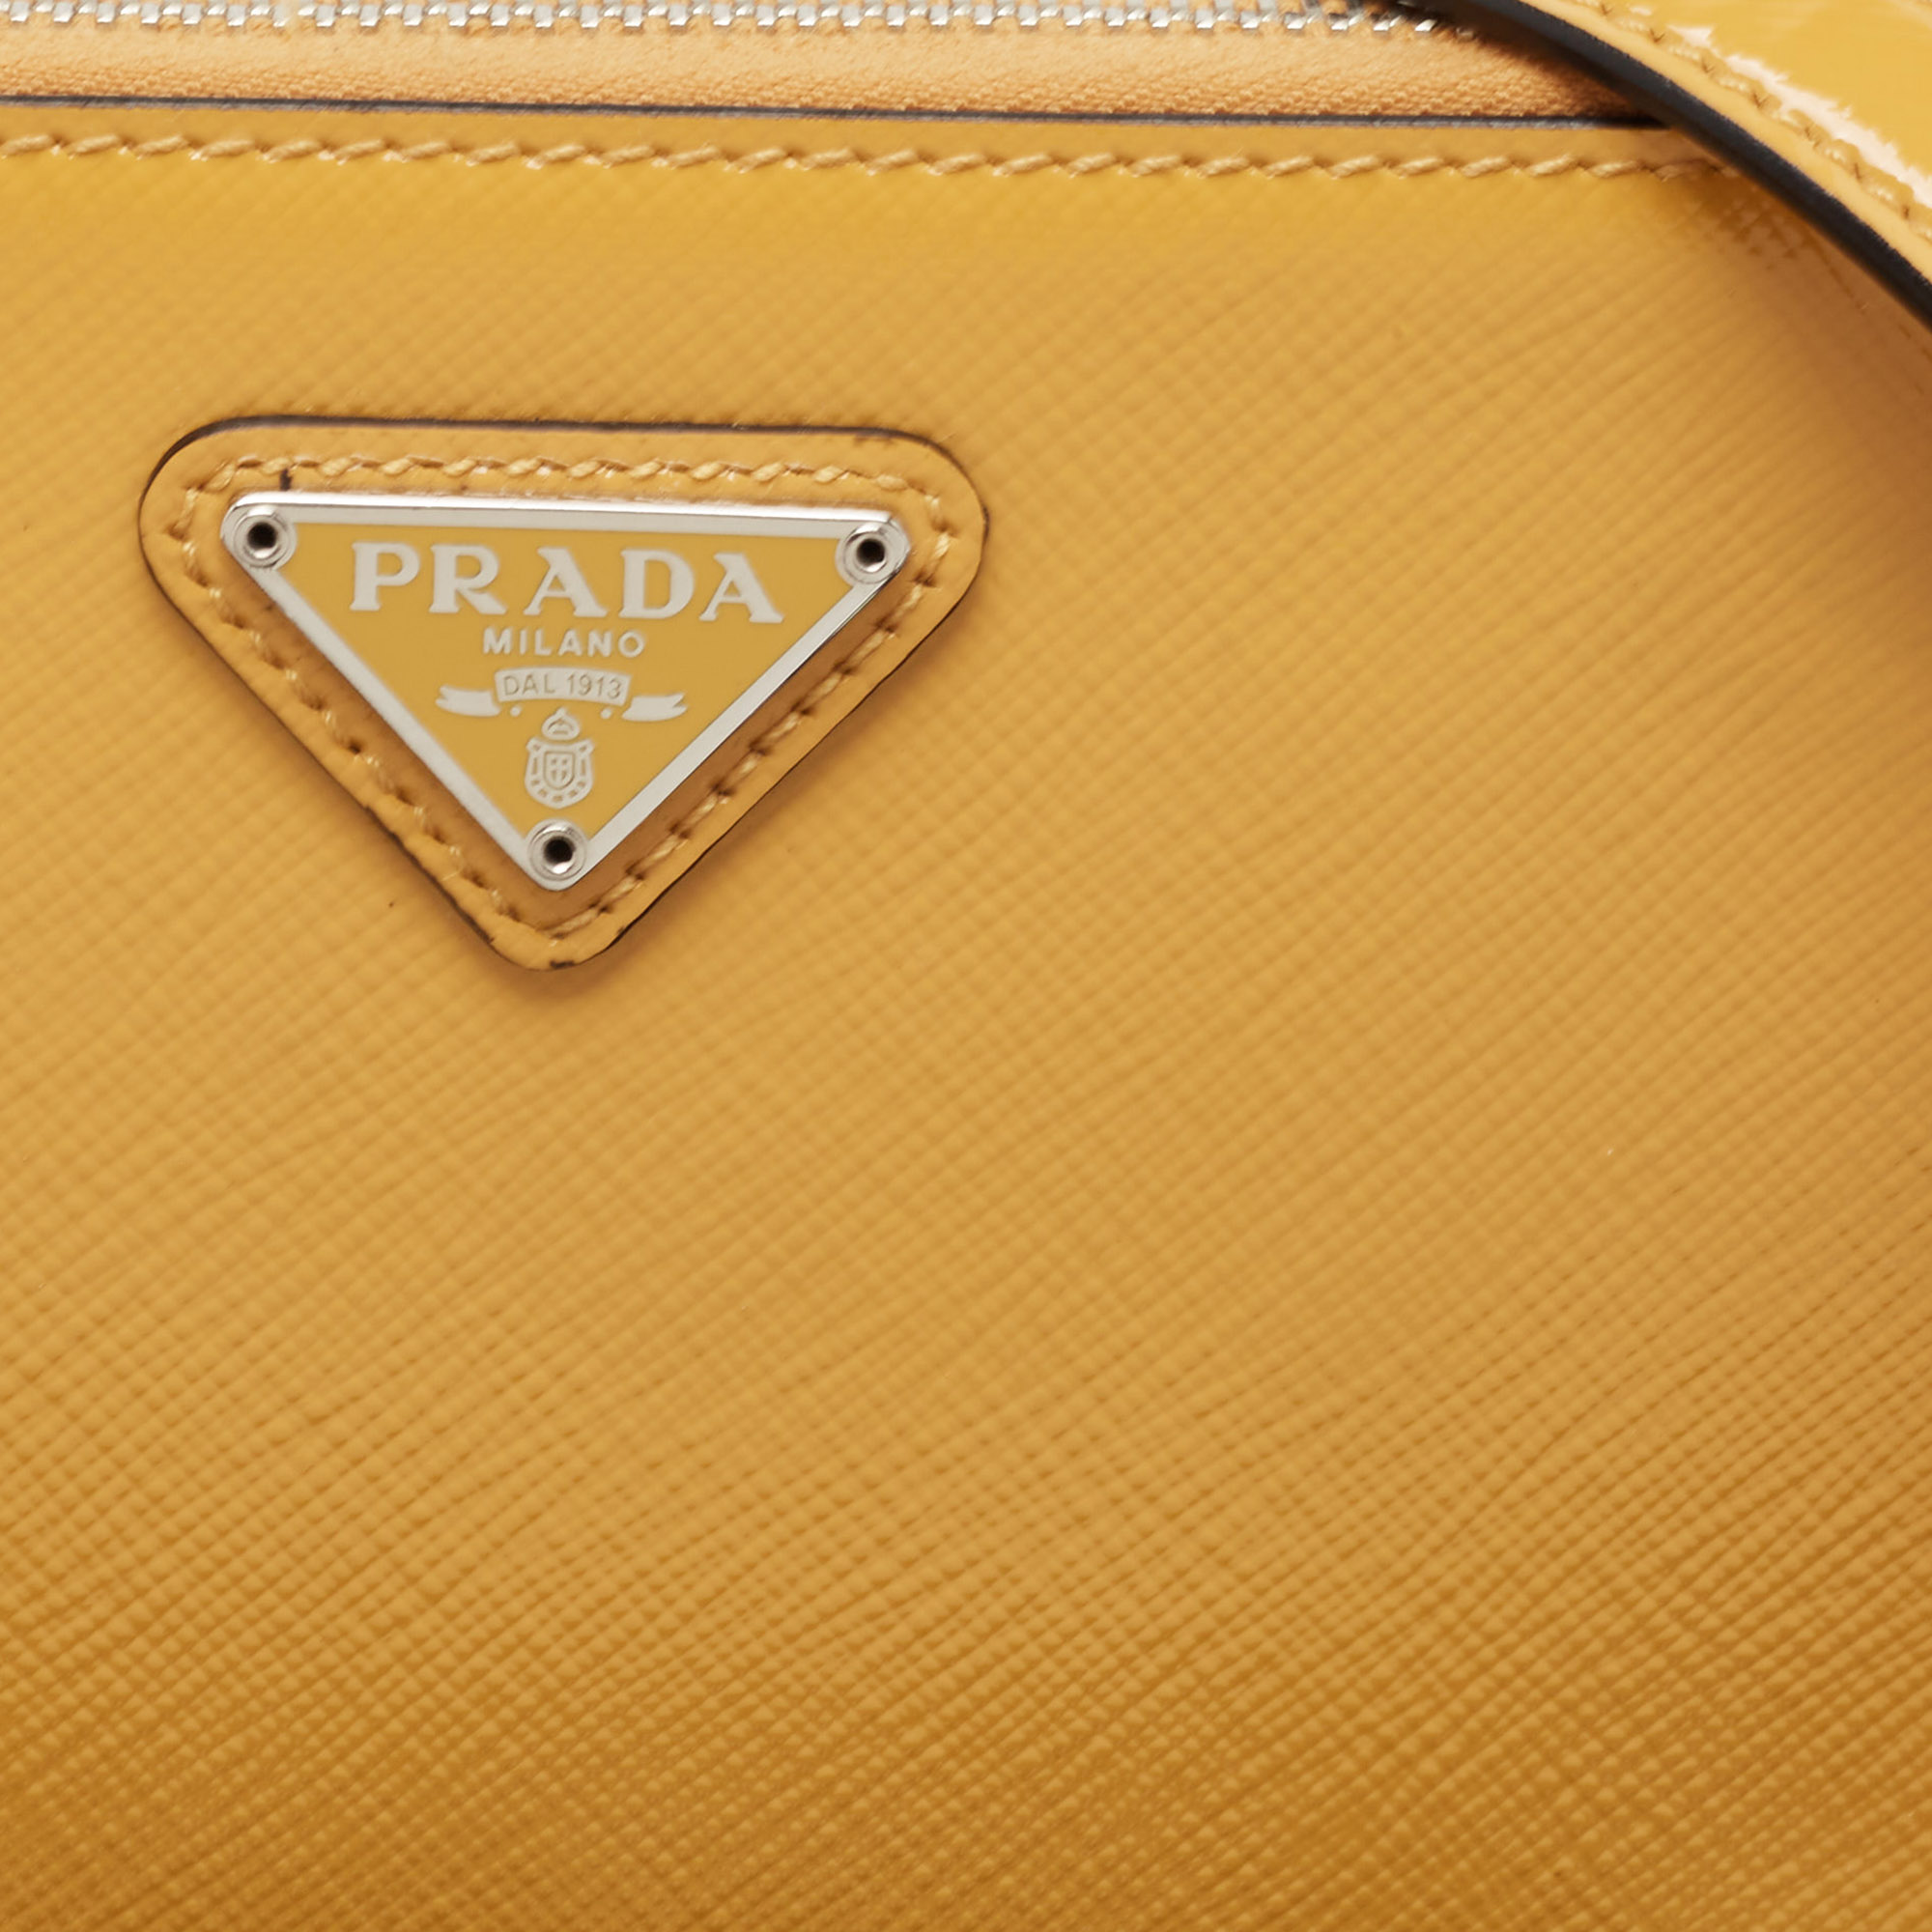 Prada Yellow Saffiano Vernice Leather Chain Shoulder Bag